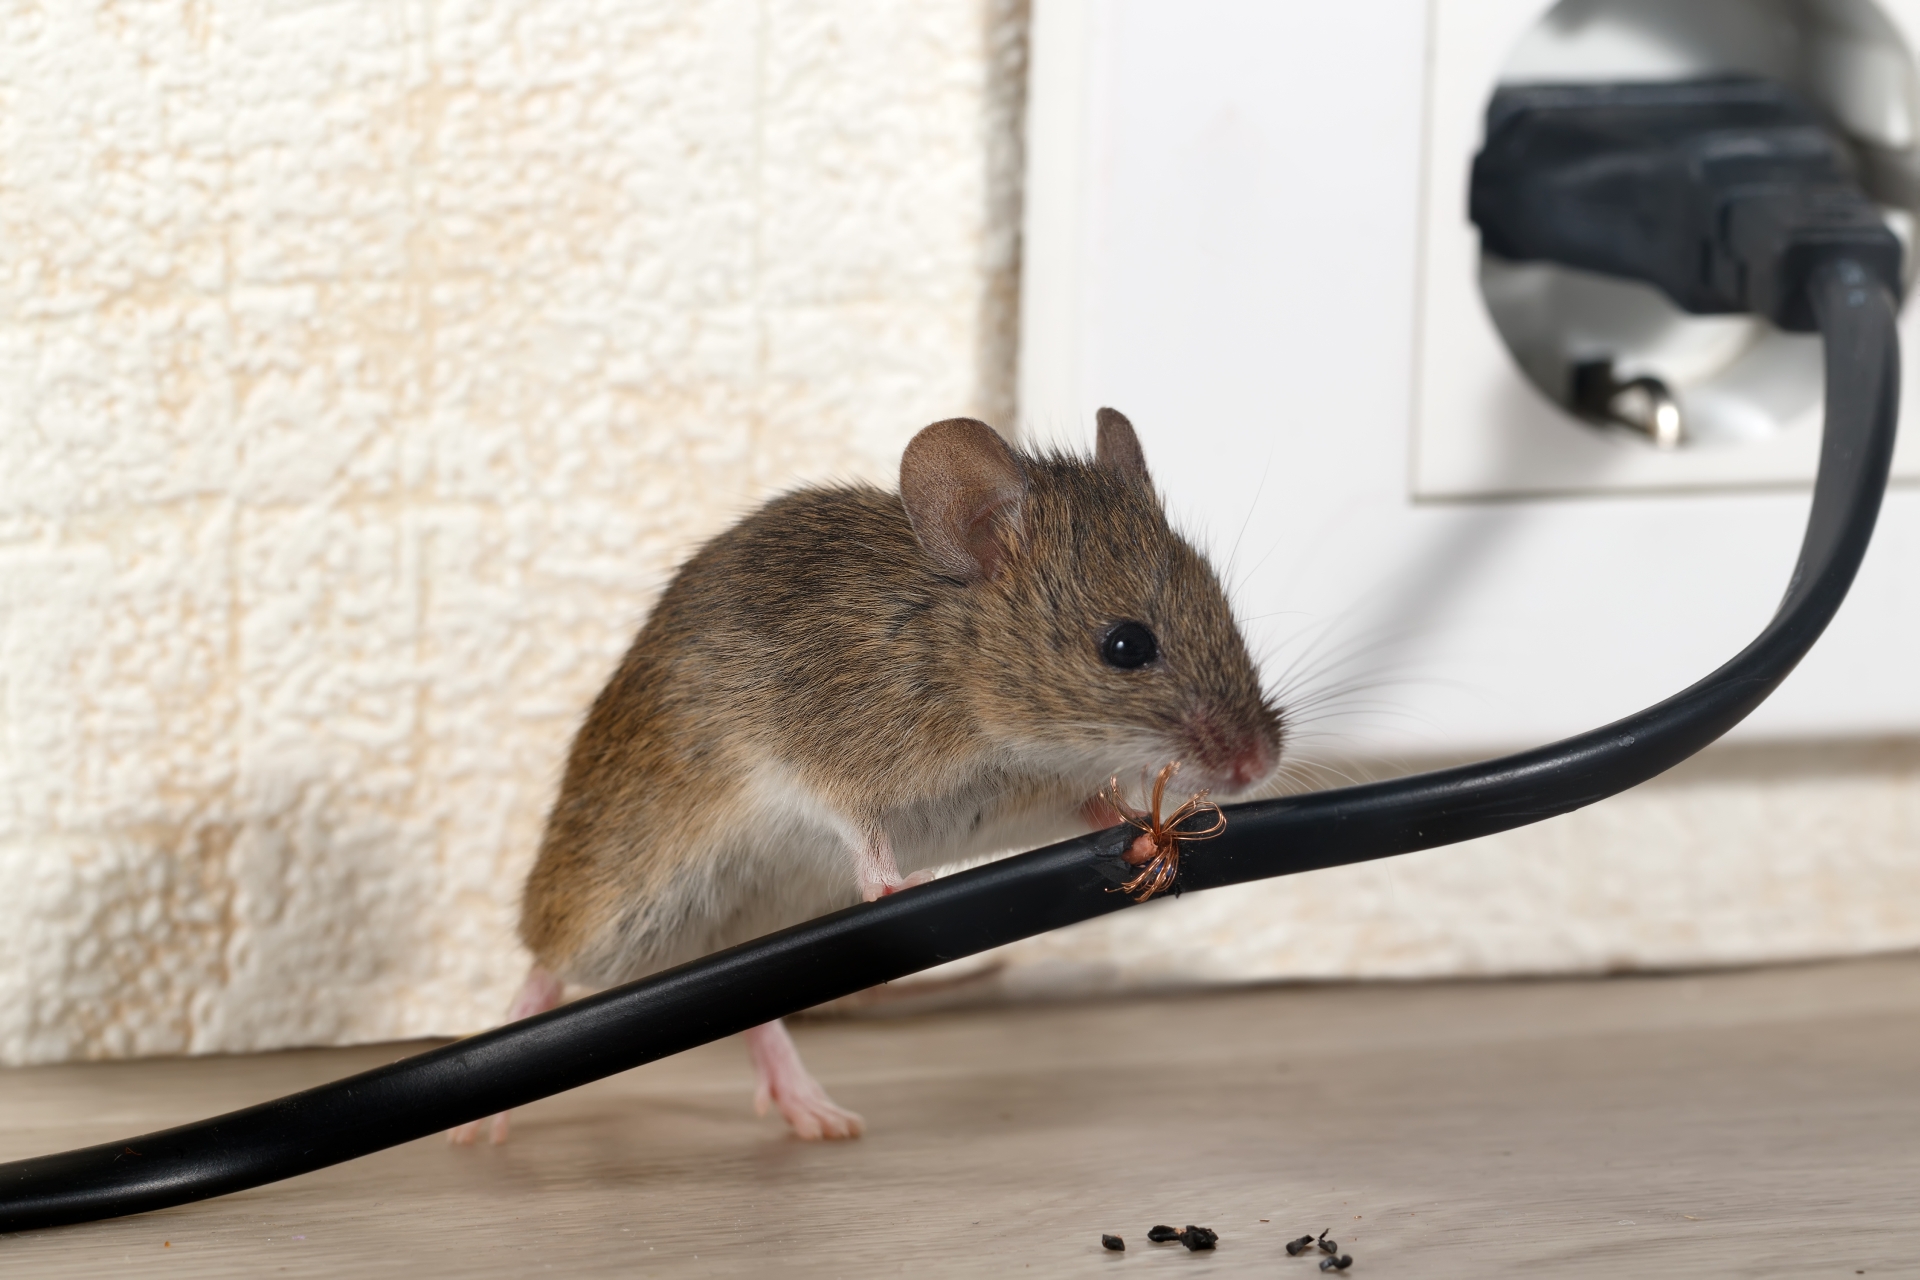 Mice Infestation, Pest Control in Ladbroke Grove, North Kensington, W10. Call Now 020 8166 9746